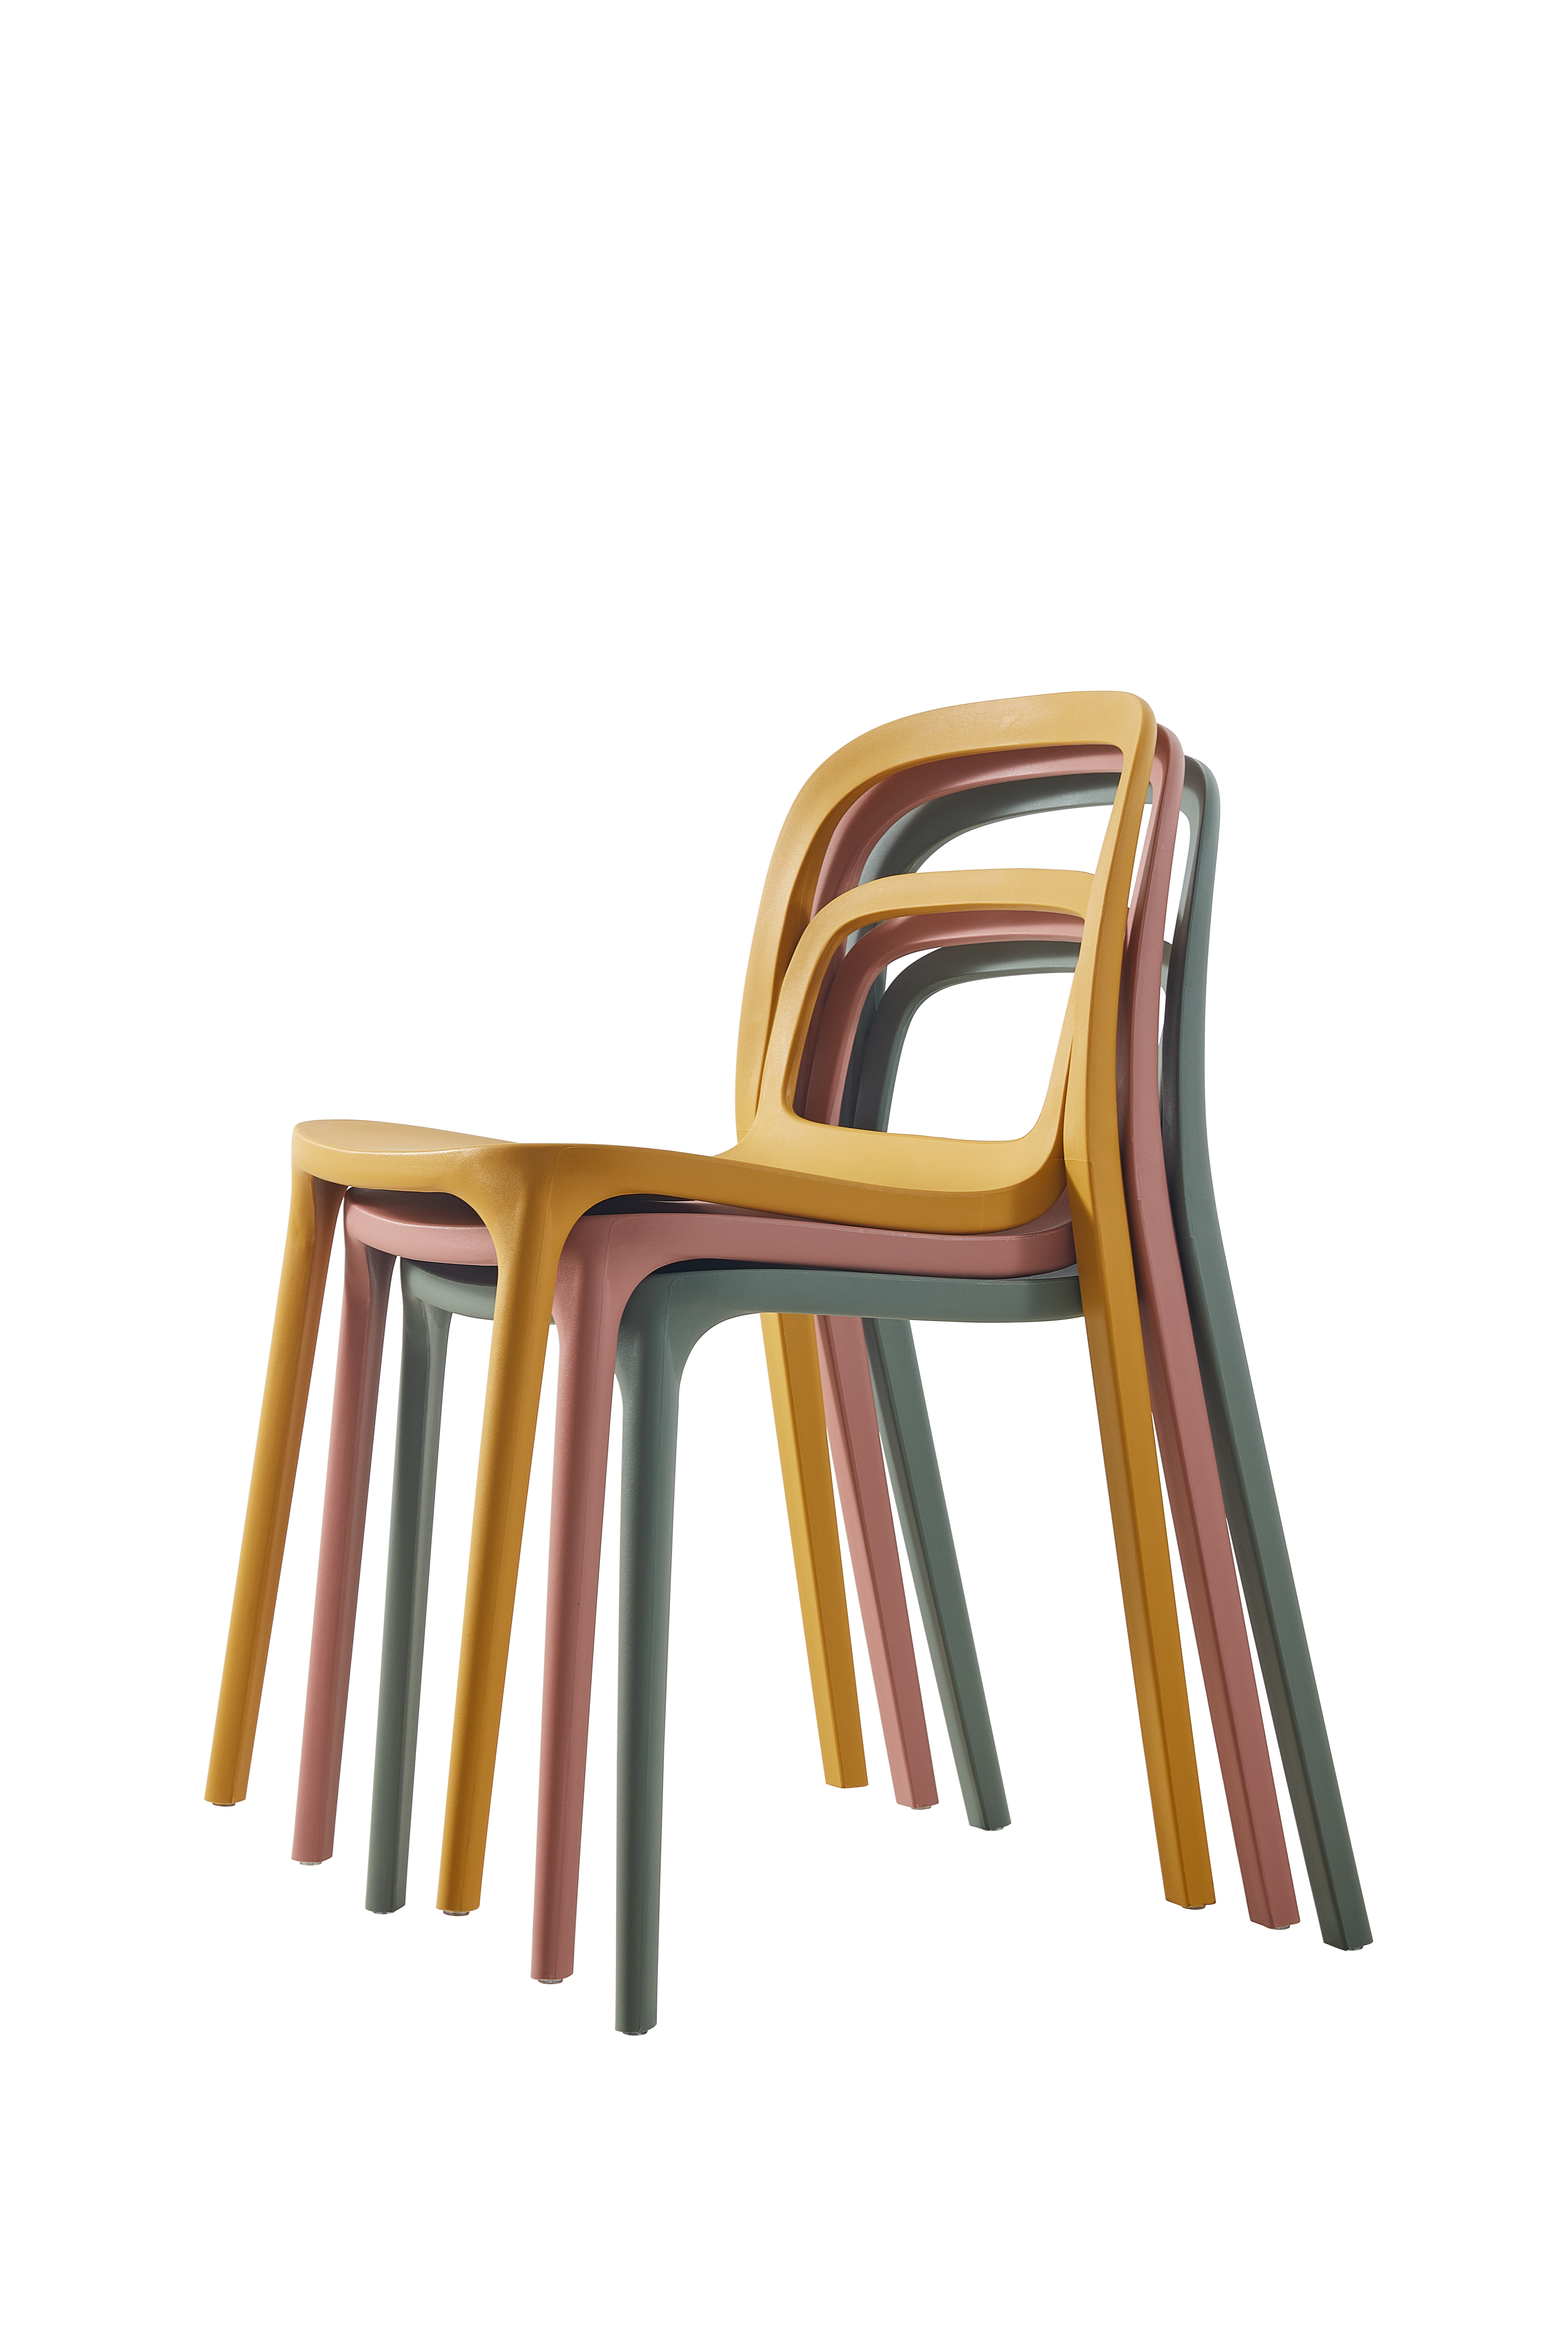 Wholesale Customized Design outdoor furniture Plastic Garden Chair